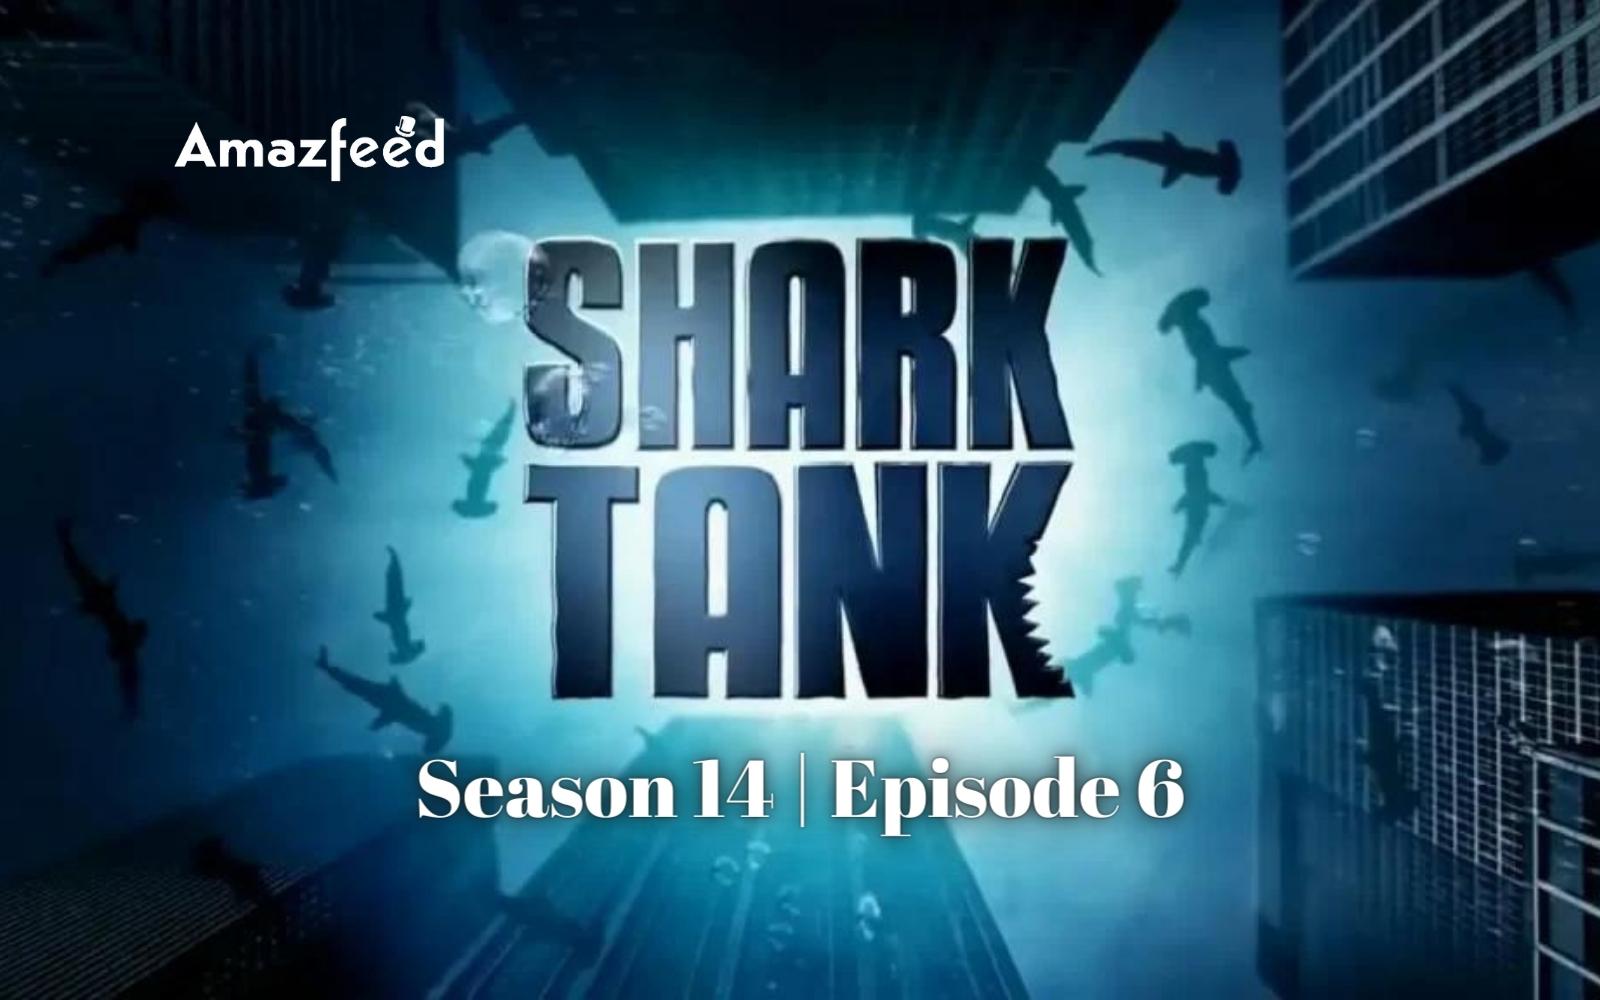 Shark Tank Season 14 Episode 6 ⇒ Countdown, Release Date, Spoilers, Recap, Cast & News Updates